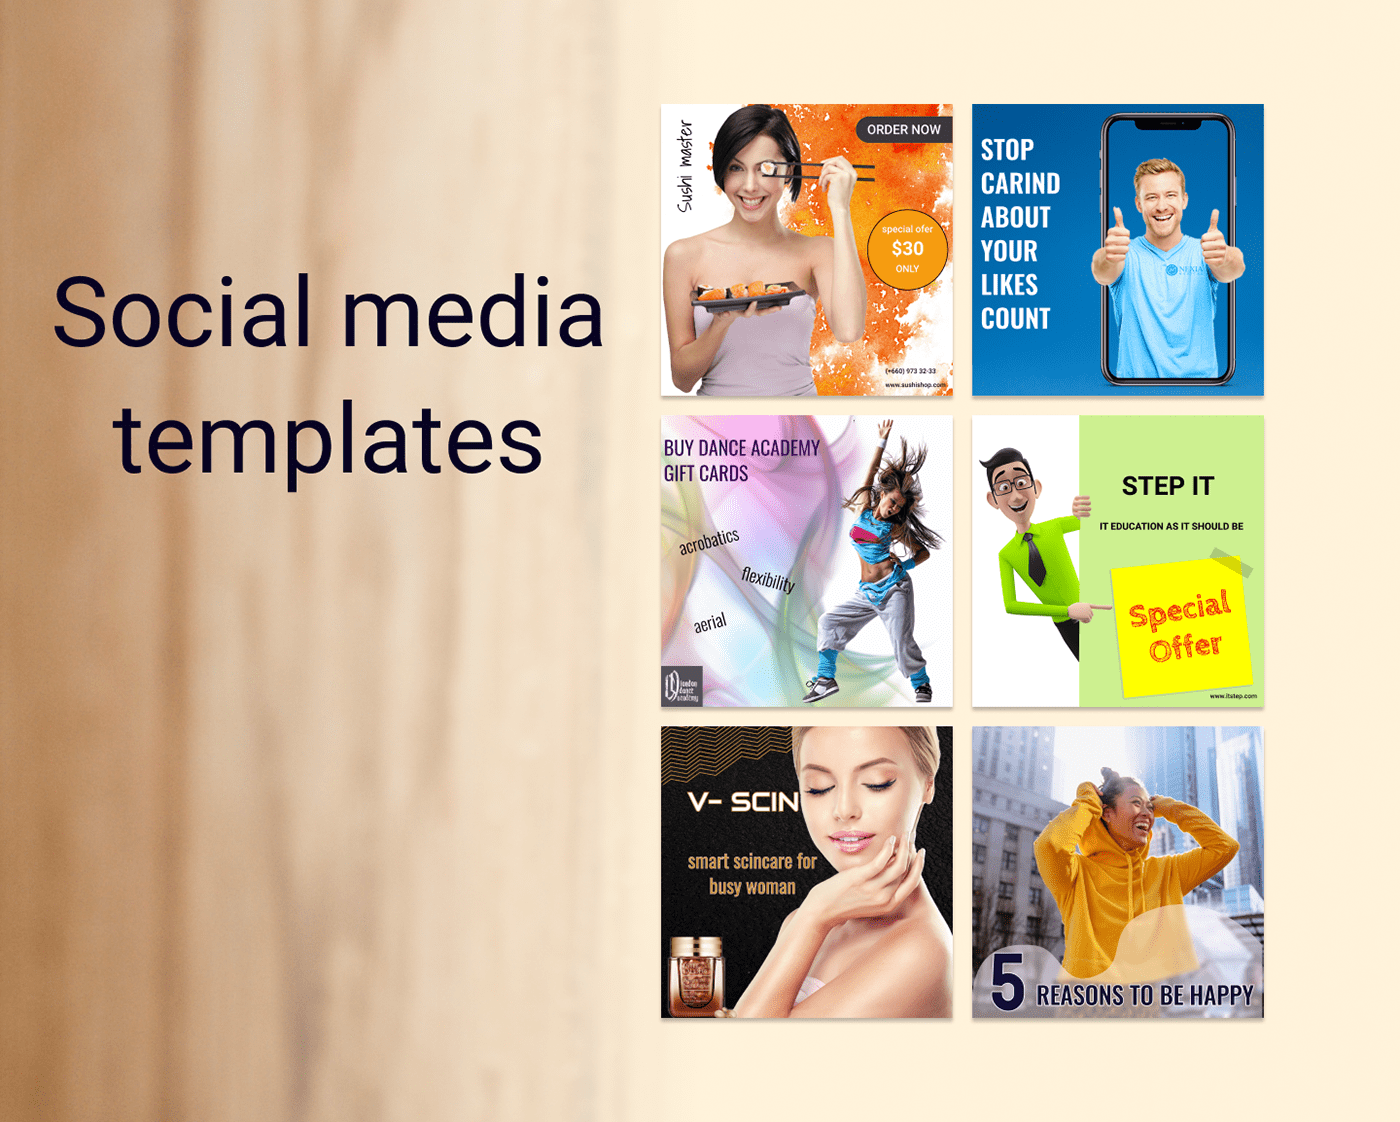 #facebookadds #instagramadds #SMM #socialmedia   #SocialMediaMarketing #socialmediatemplates #sushi